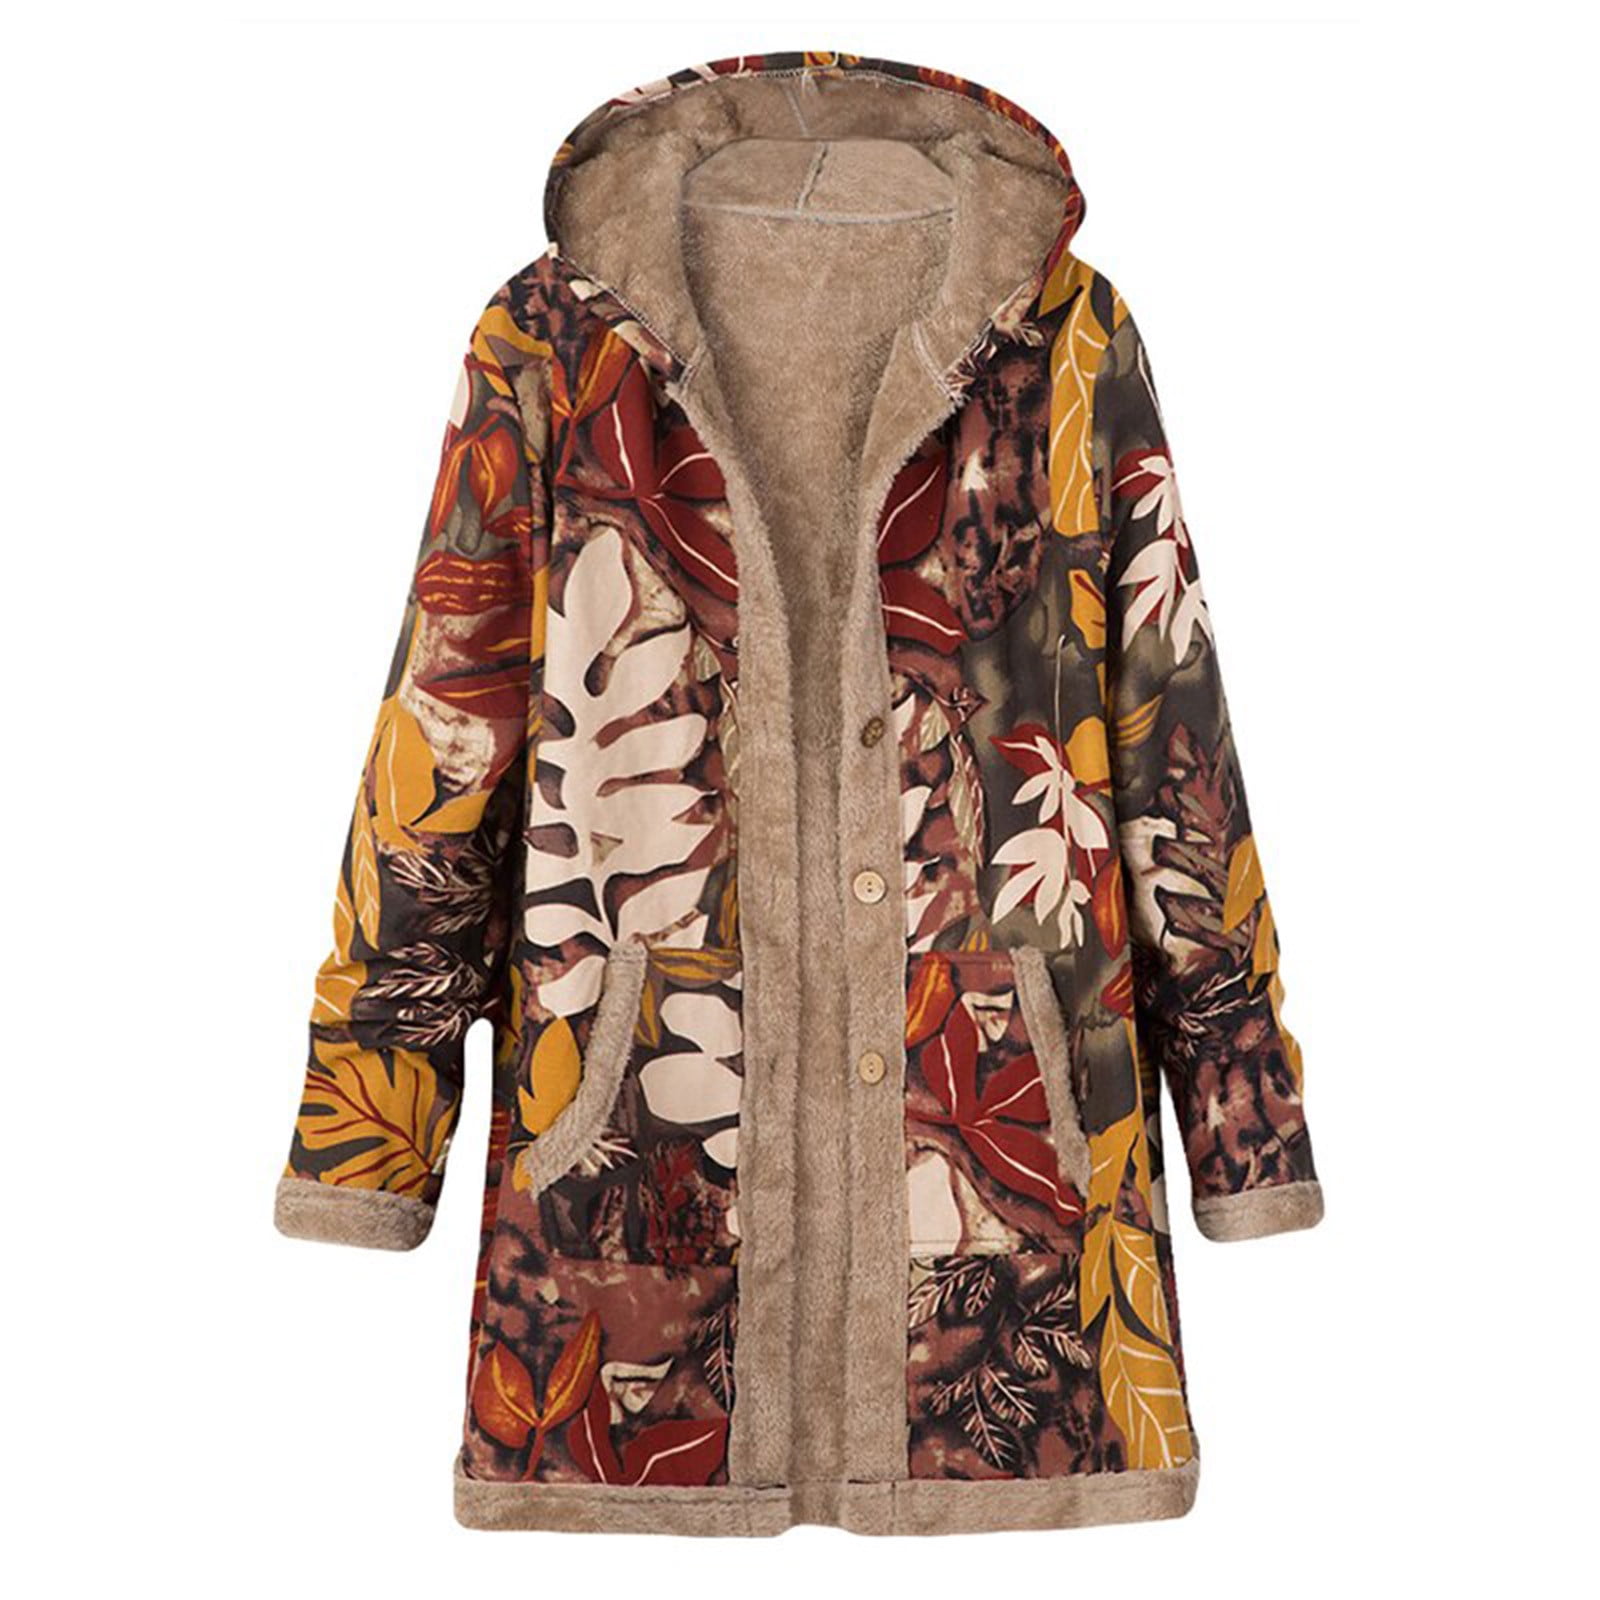 Scyoekwg Fall Winter Fleece Jacket for Women Cotton and Linen Vintage  Ethnic Printed Long Sleeve Hooded Pocket Plus Velvet Casual Buttons Warm  Outwear Coat #A03-Khaki XXXXXL 